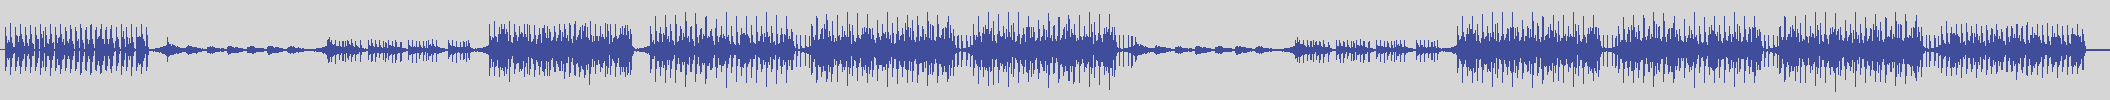 nf_boyz_records [NFY048] Dee Drop - Tadpole [Night Player Mix] audio wave form